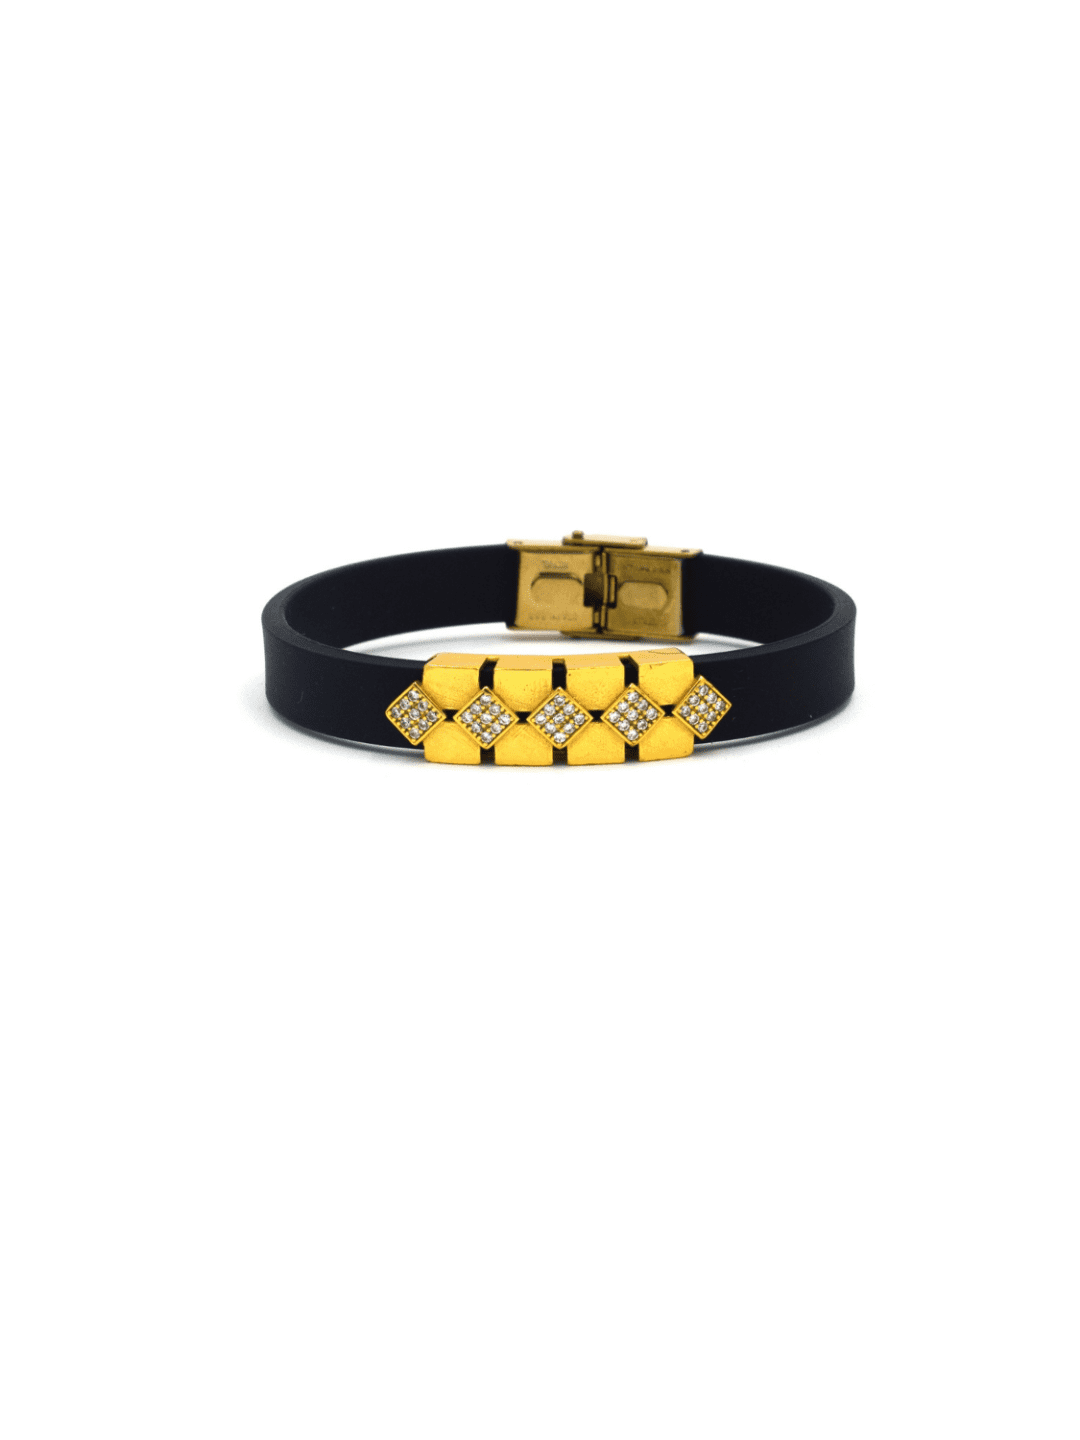 Black and Yellow American Diamond Leather Bracelet